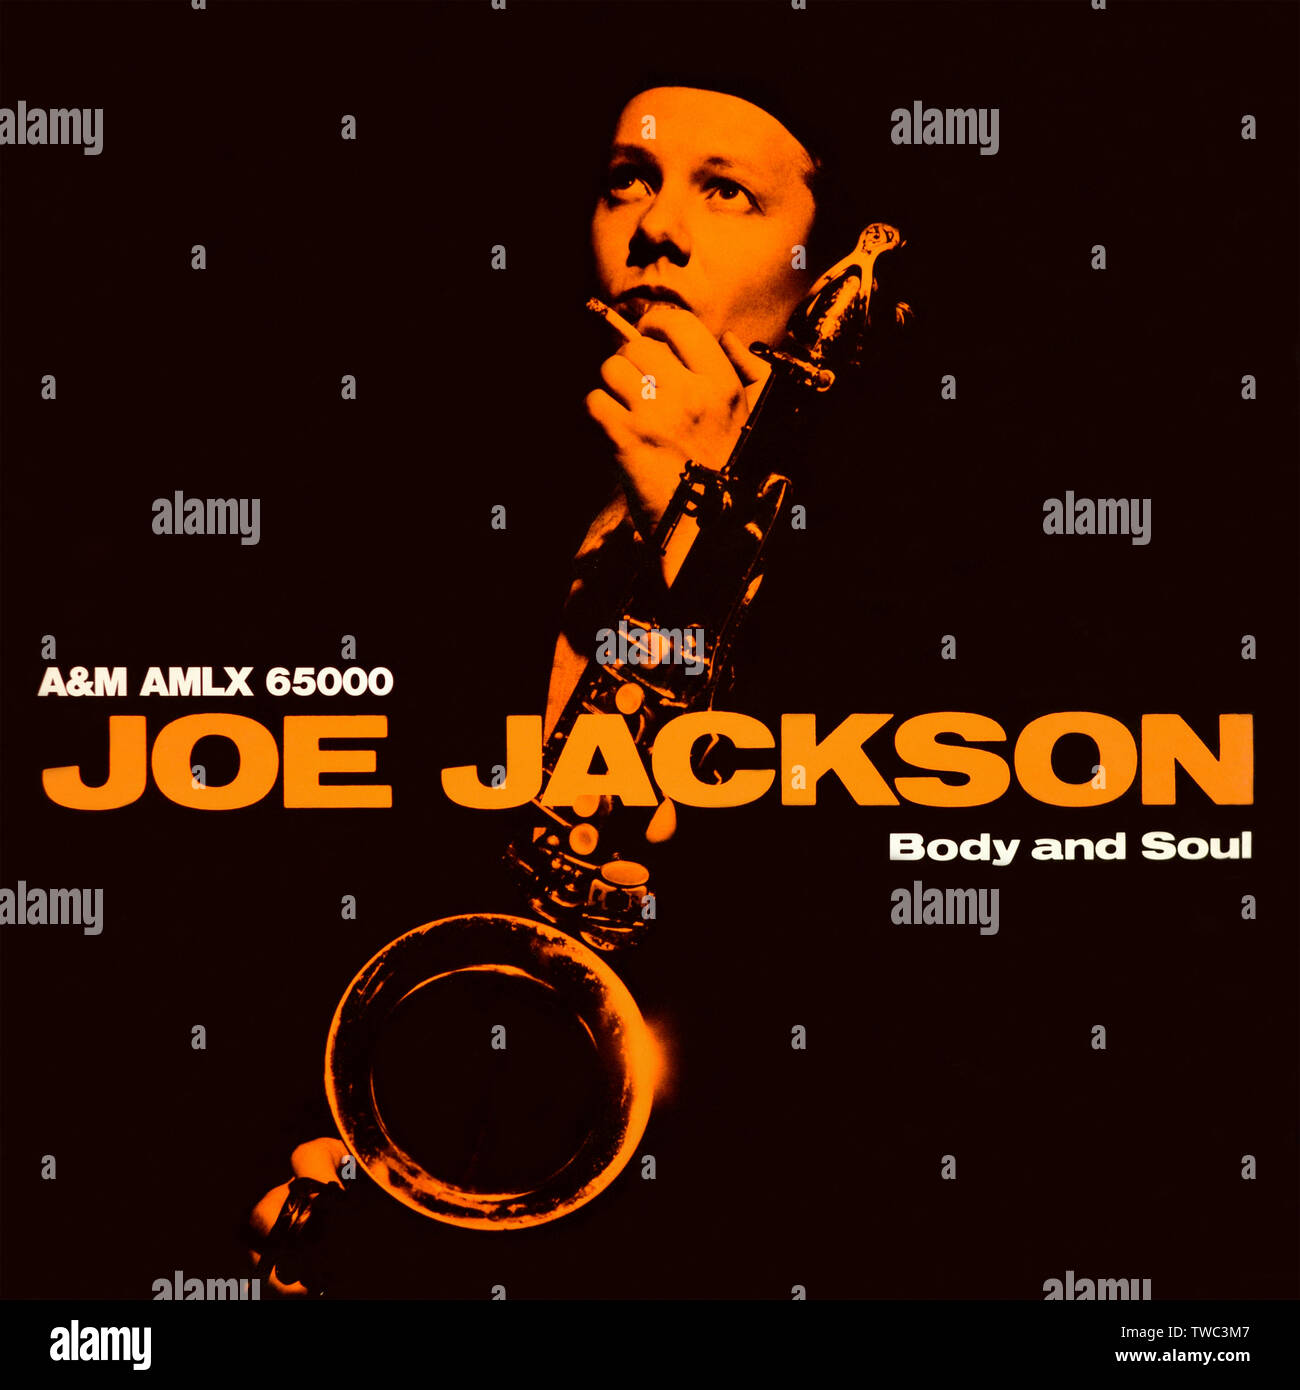 Joe Jackson - original vinyl album cover - Body And Soul - 1984 Stock Photo